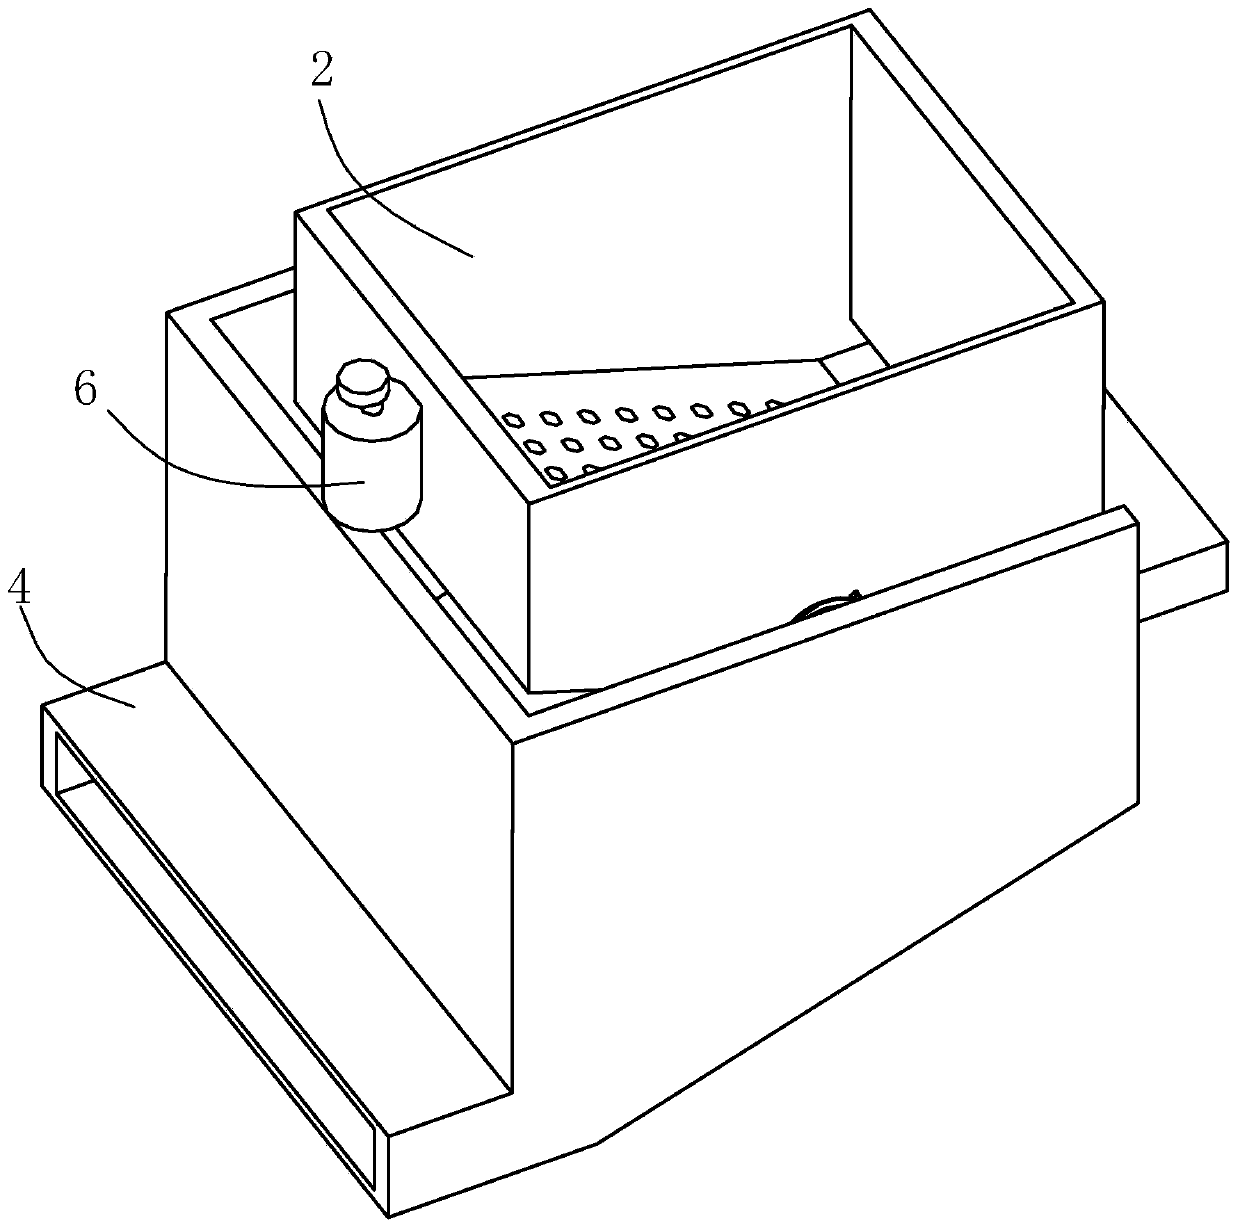 A solder screening device